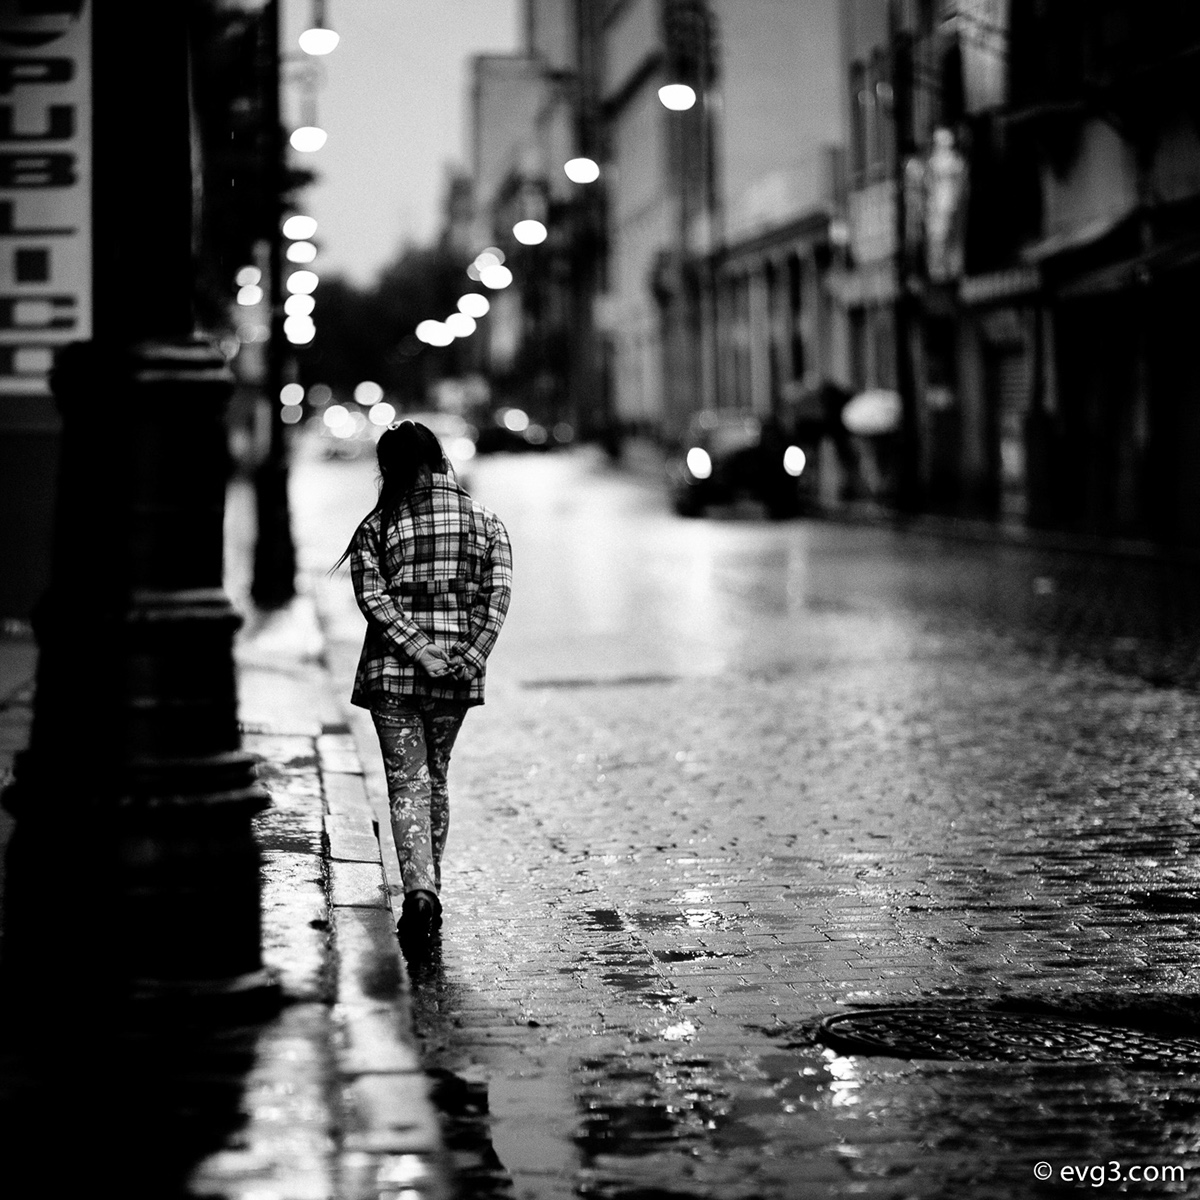 street photography mexico city black and white Fotografia 5d mark II fuji x100s night police lowlight syncretism Sincretismo storytelling   Street Stories